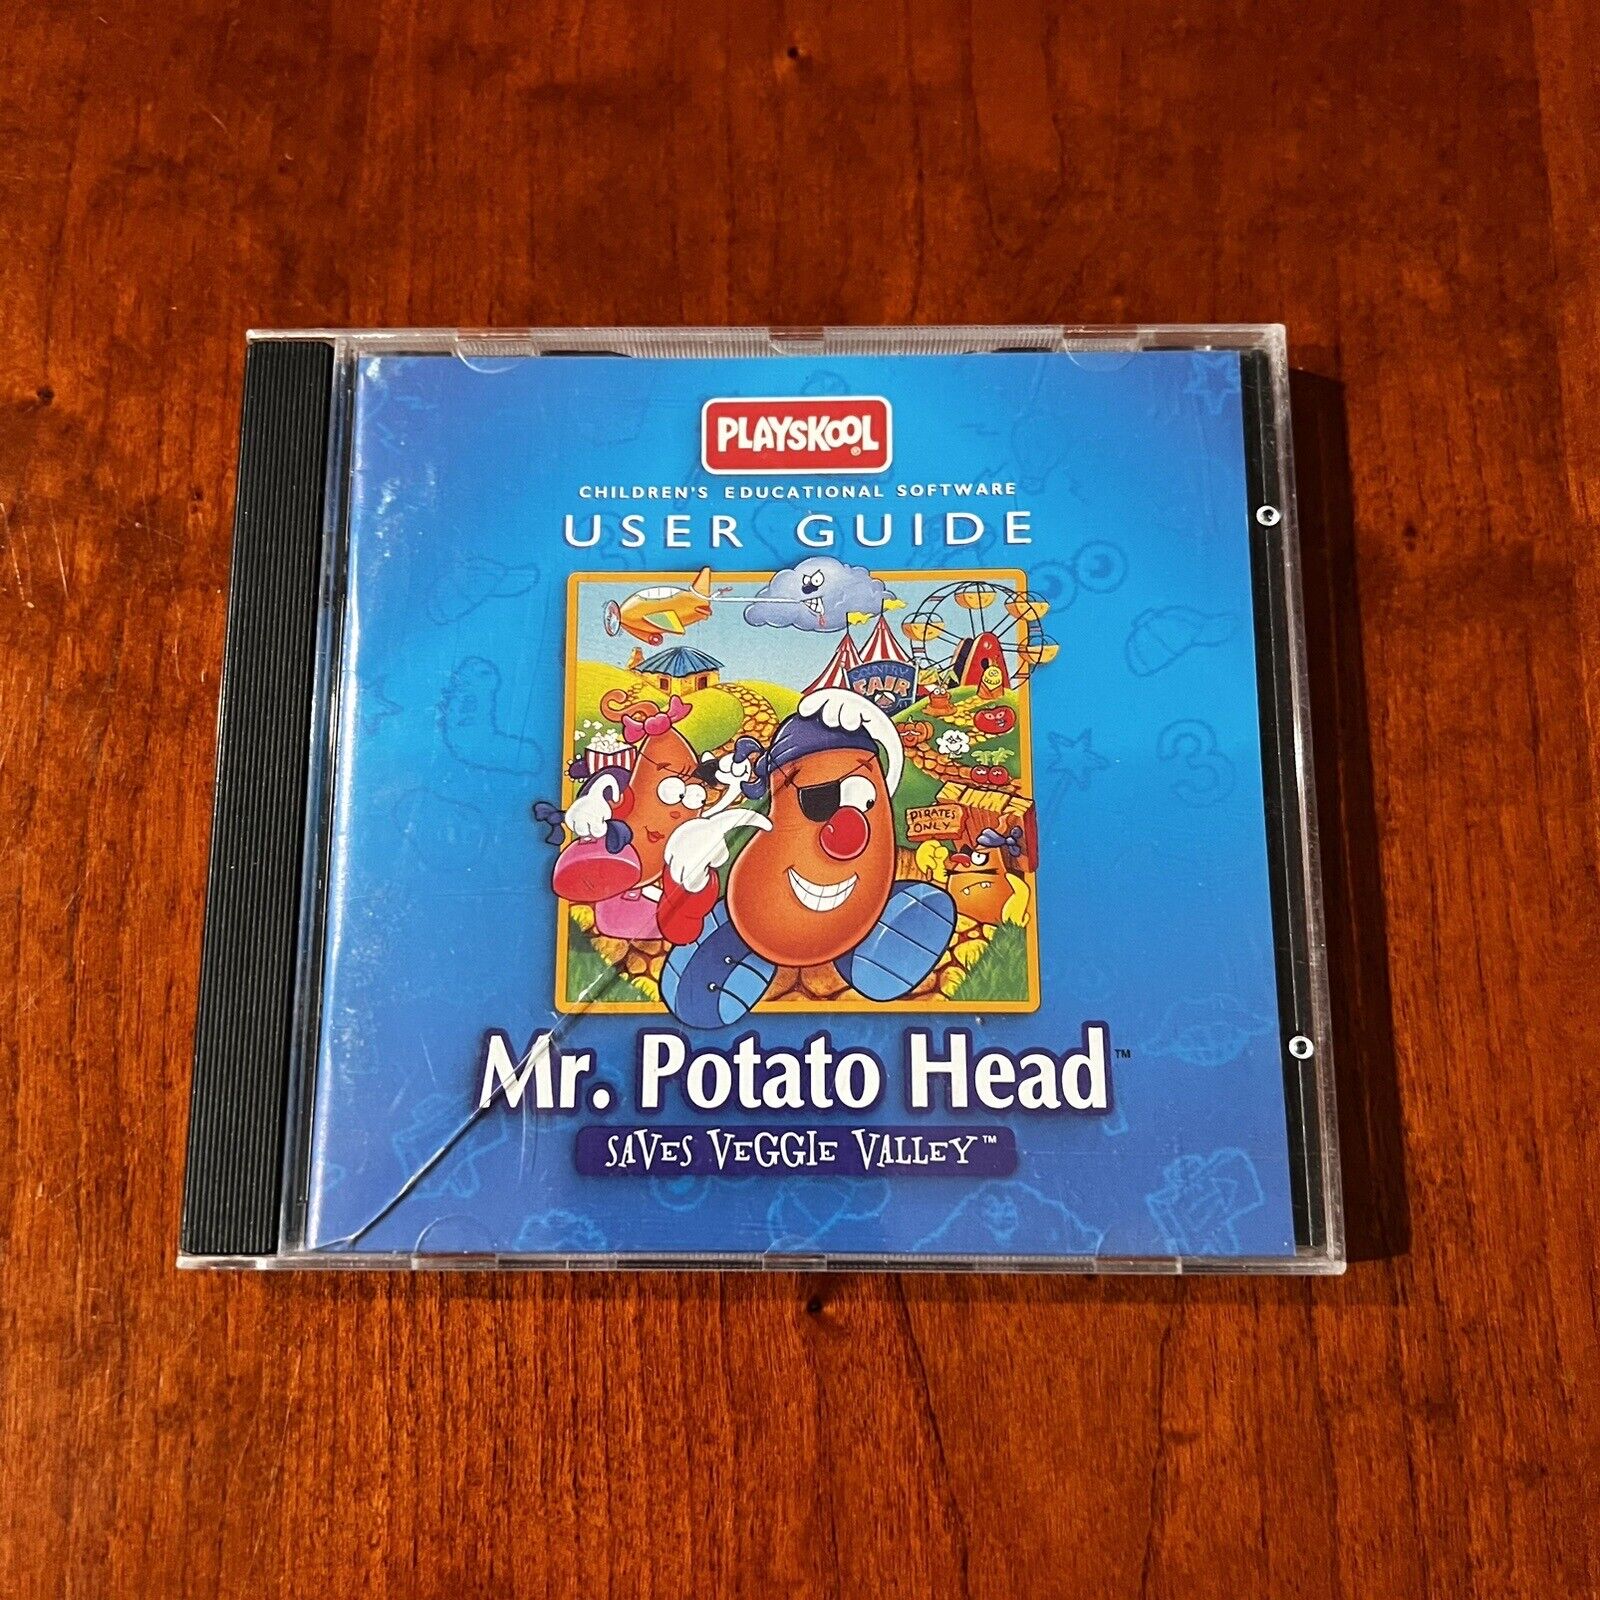 Playskook Mr. Potato Head Saves Veggie Valley PC CD